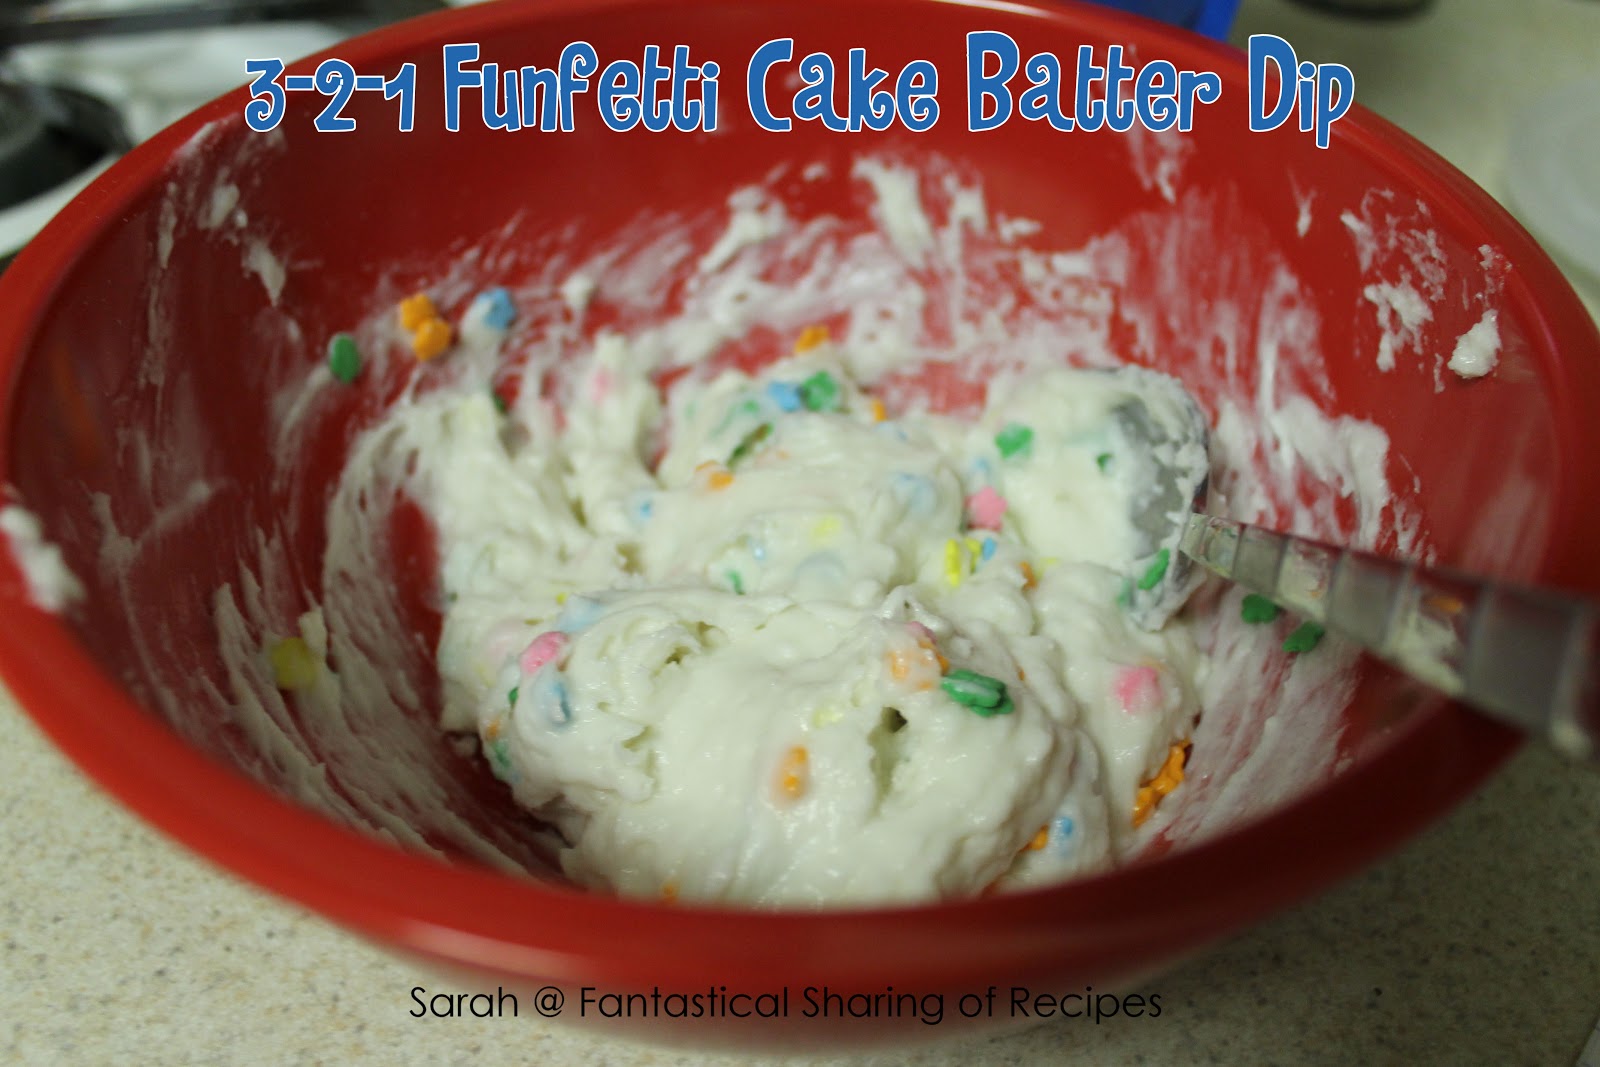 Fantastical Sharing of Recipes: 3-2-1 Funfetti Cake Batter Dip